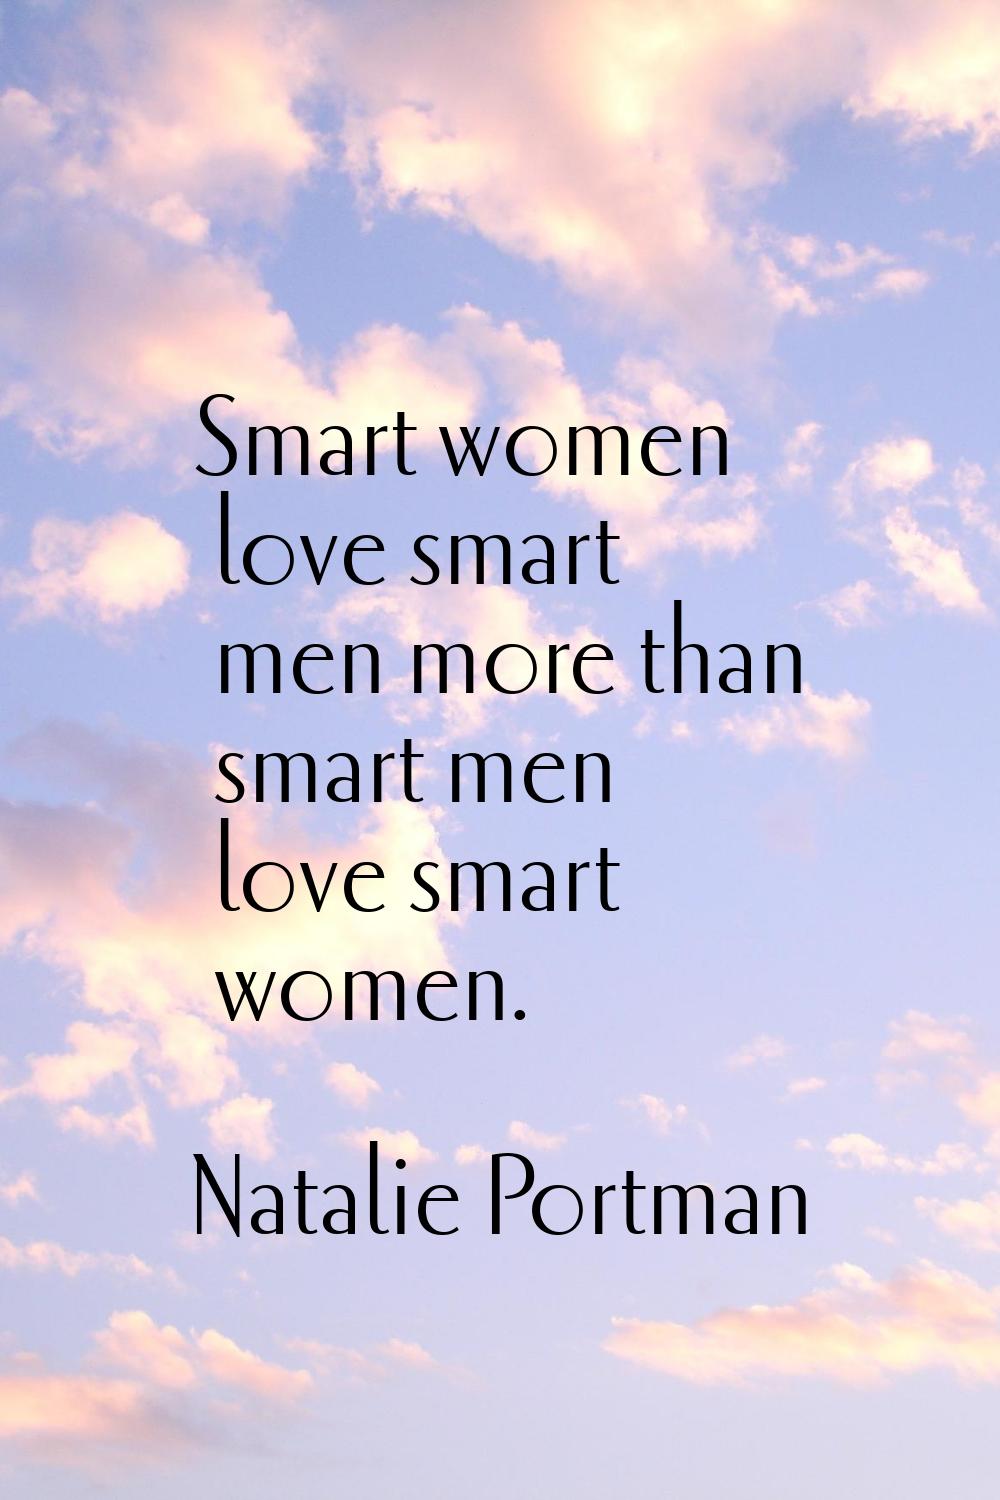 Smart women love smart men more than smart men love smart women.